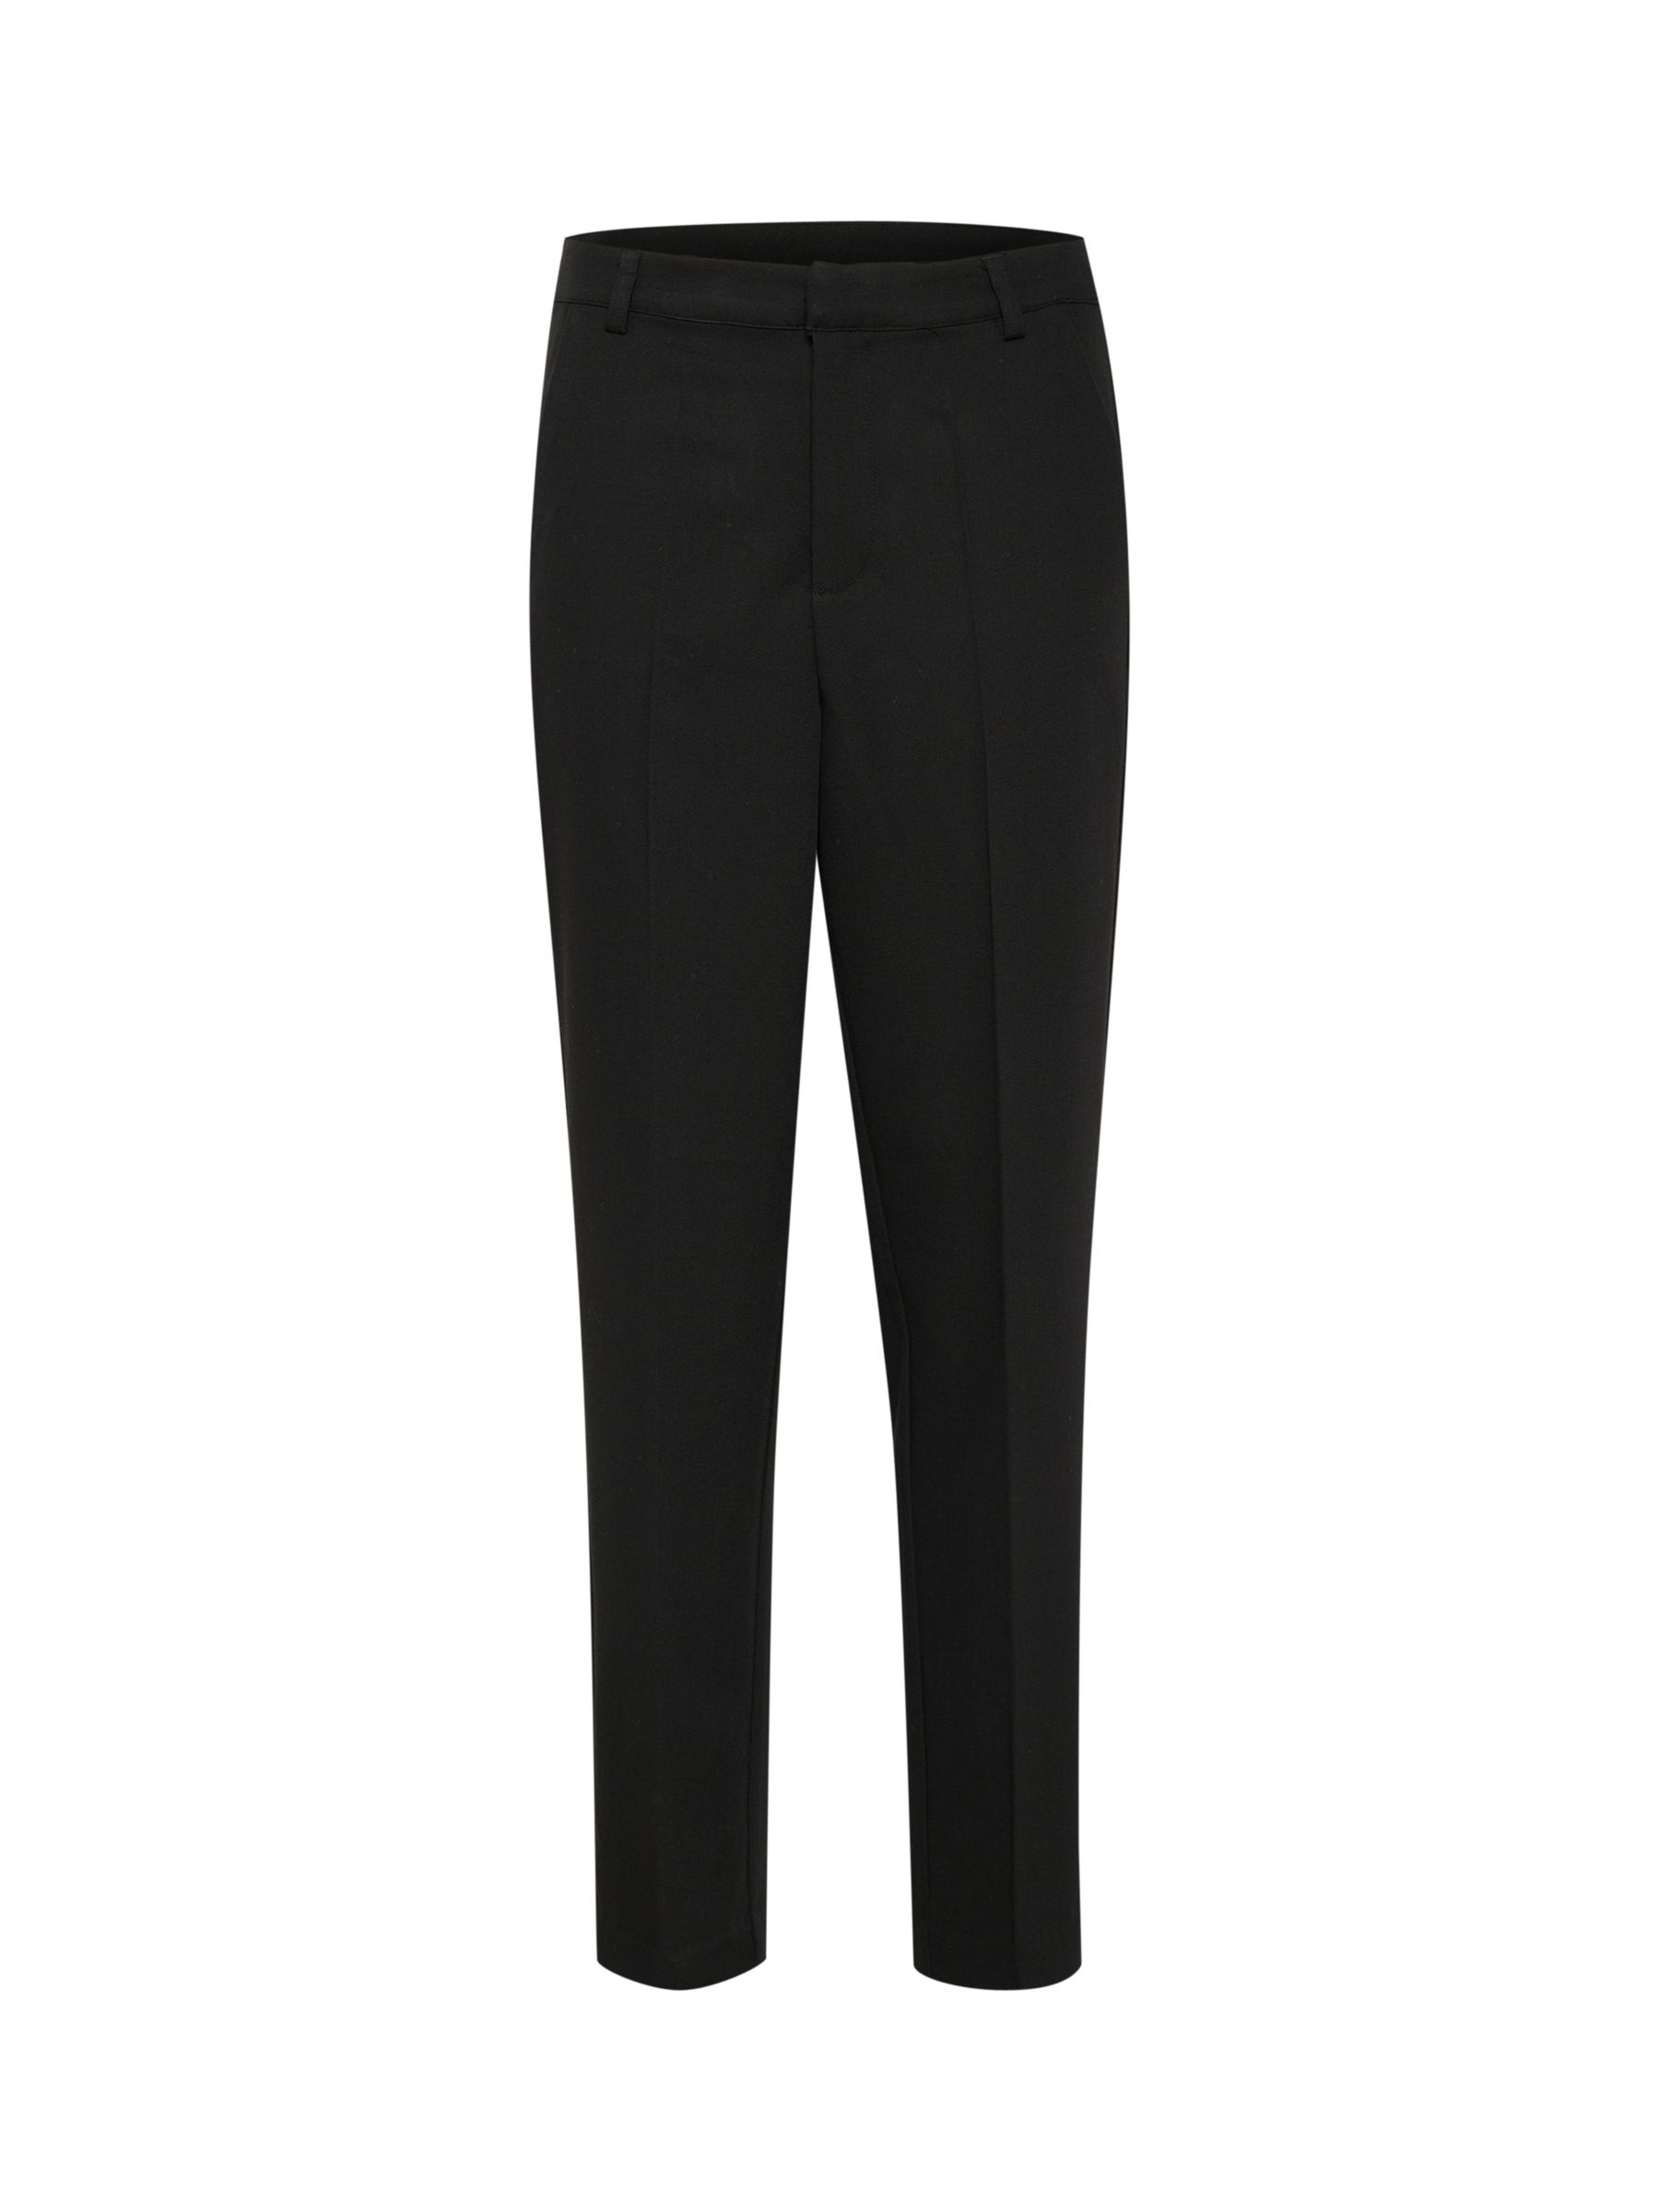 KAFFE Sakura Zip Trousers, Deep Black at John Lewis & Partners